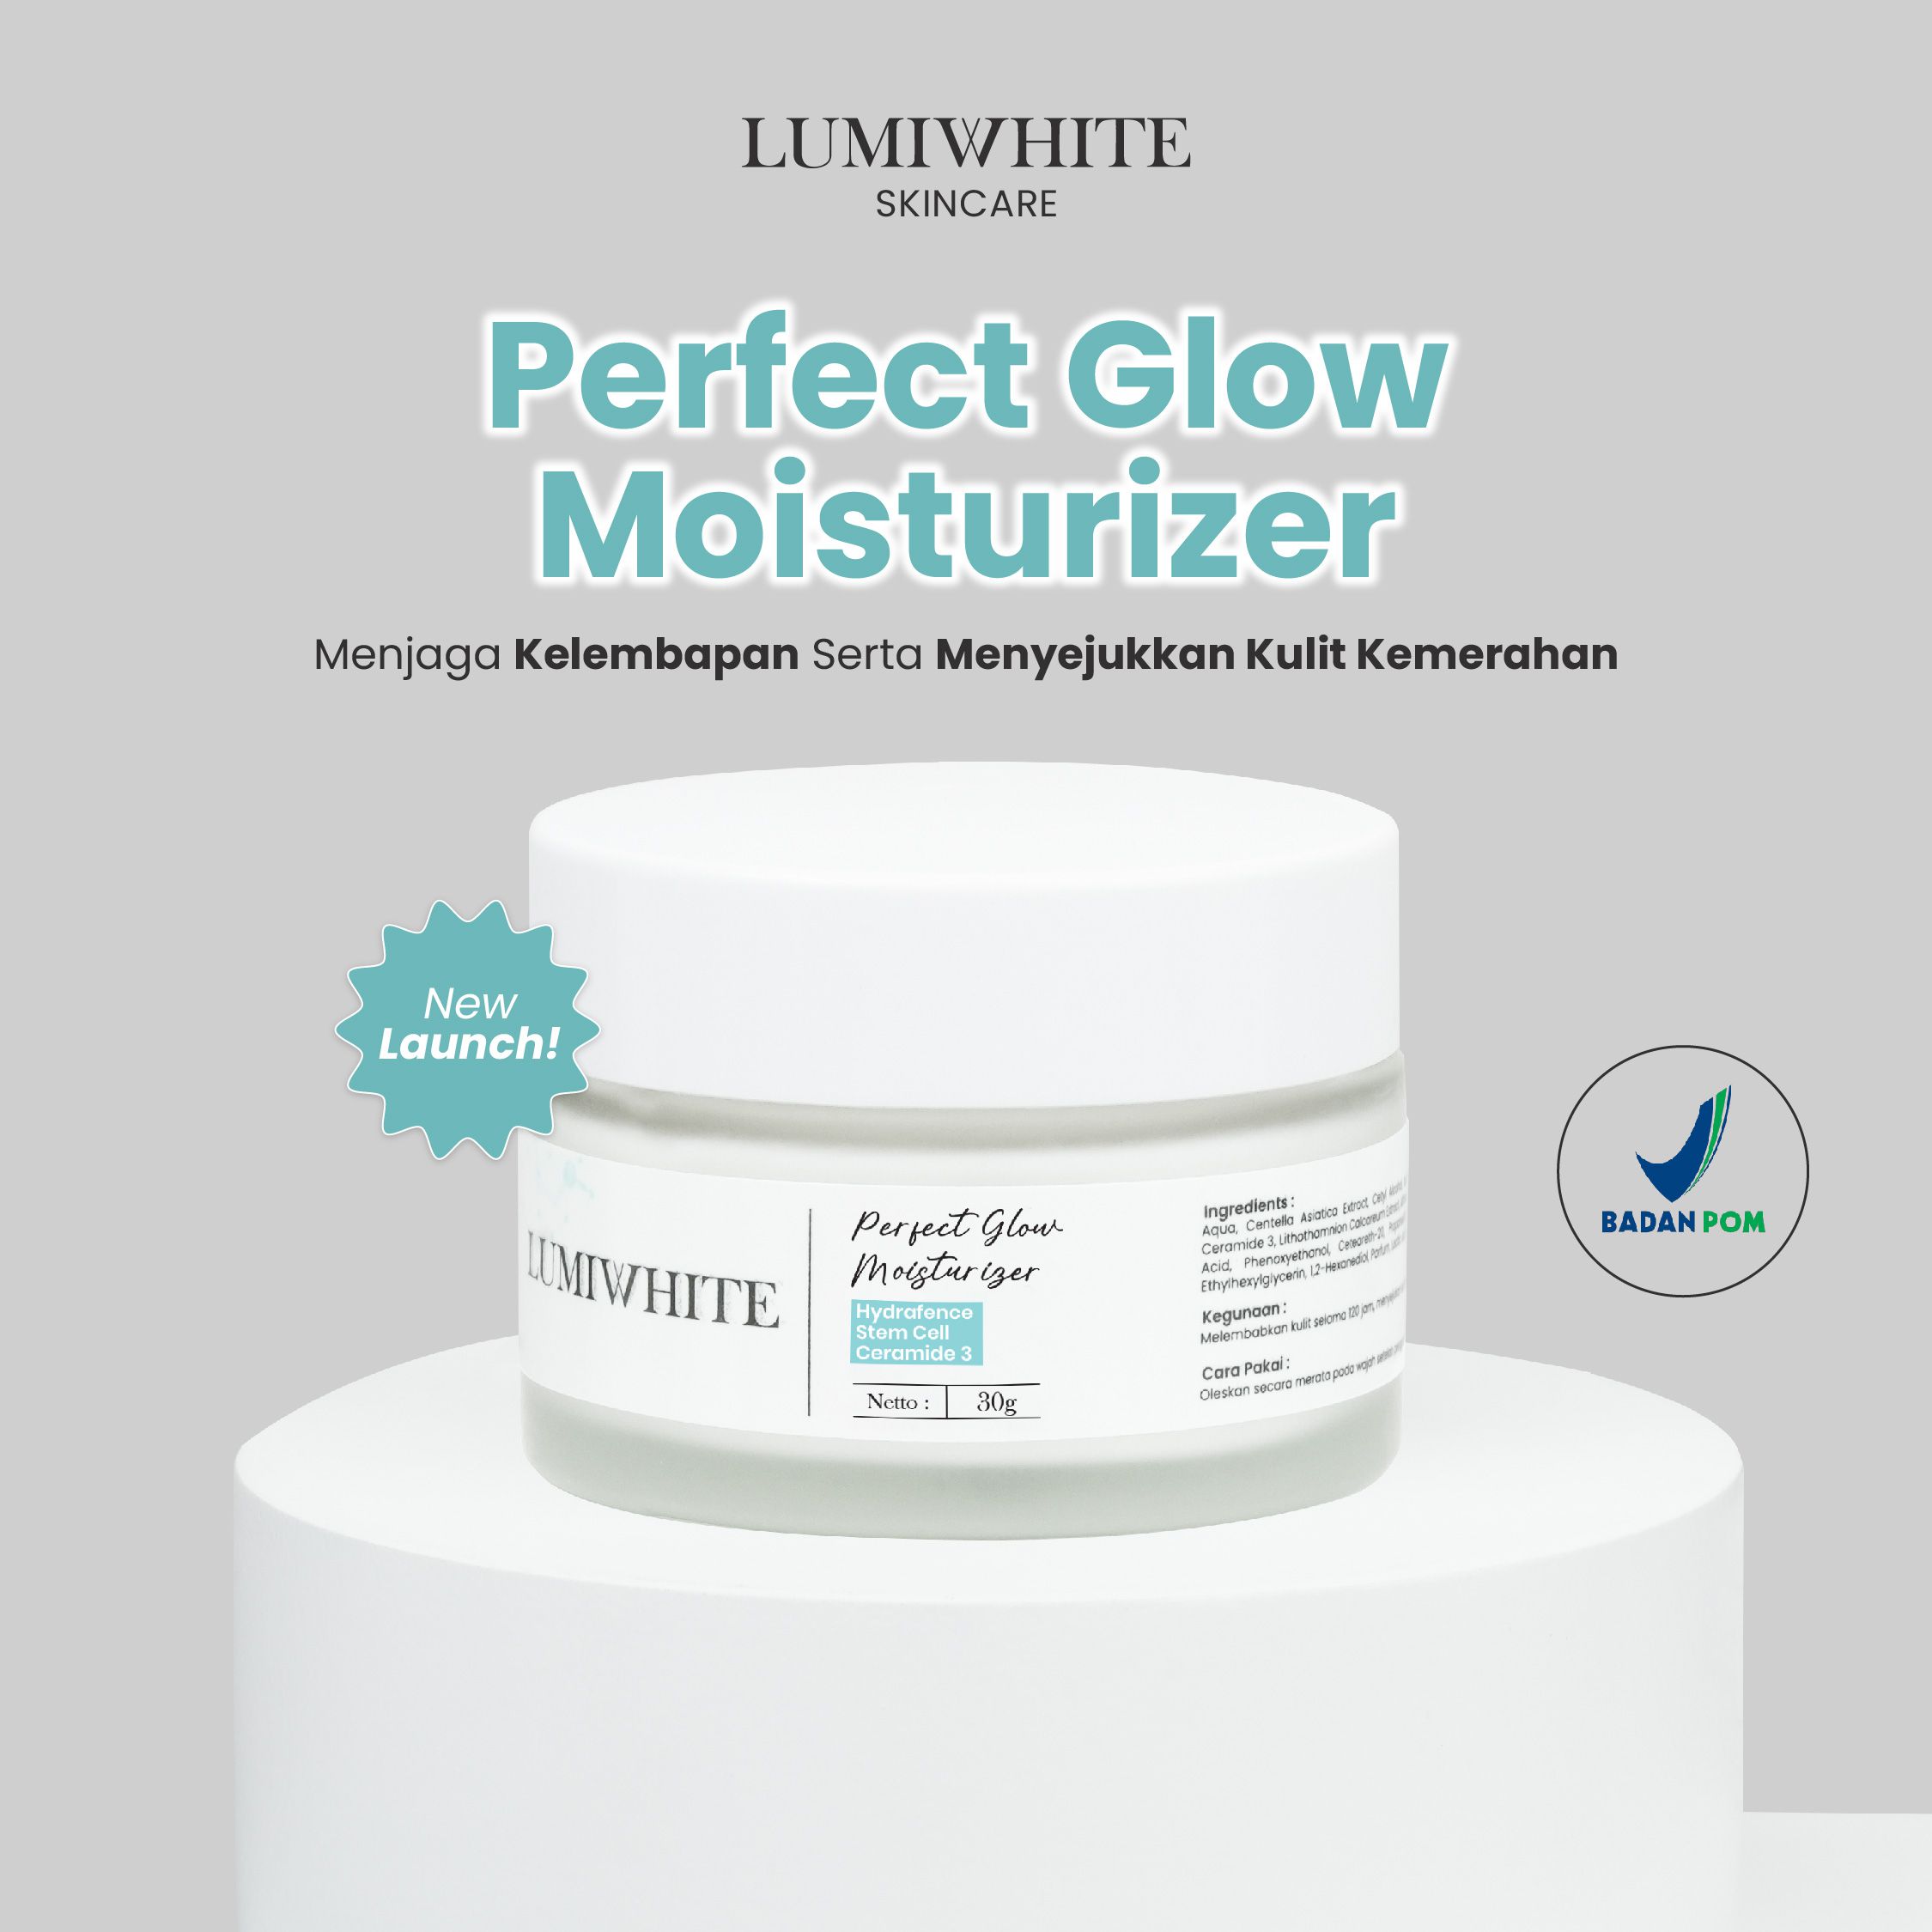 Skincare Lumiwhite Perfect Glow Moisturizer